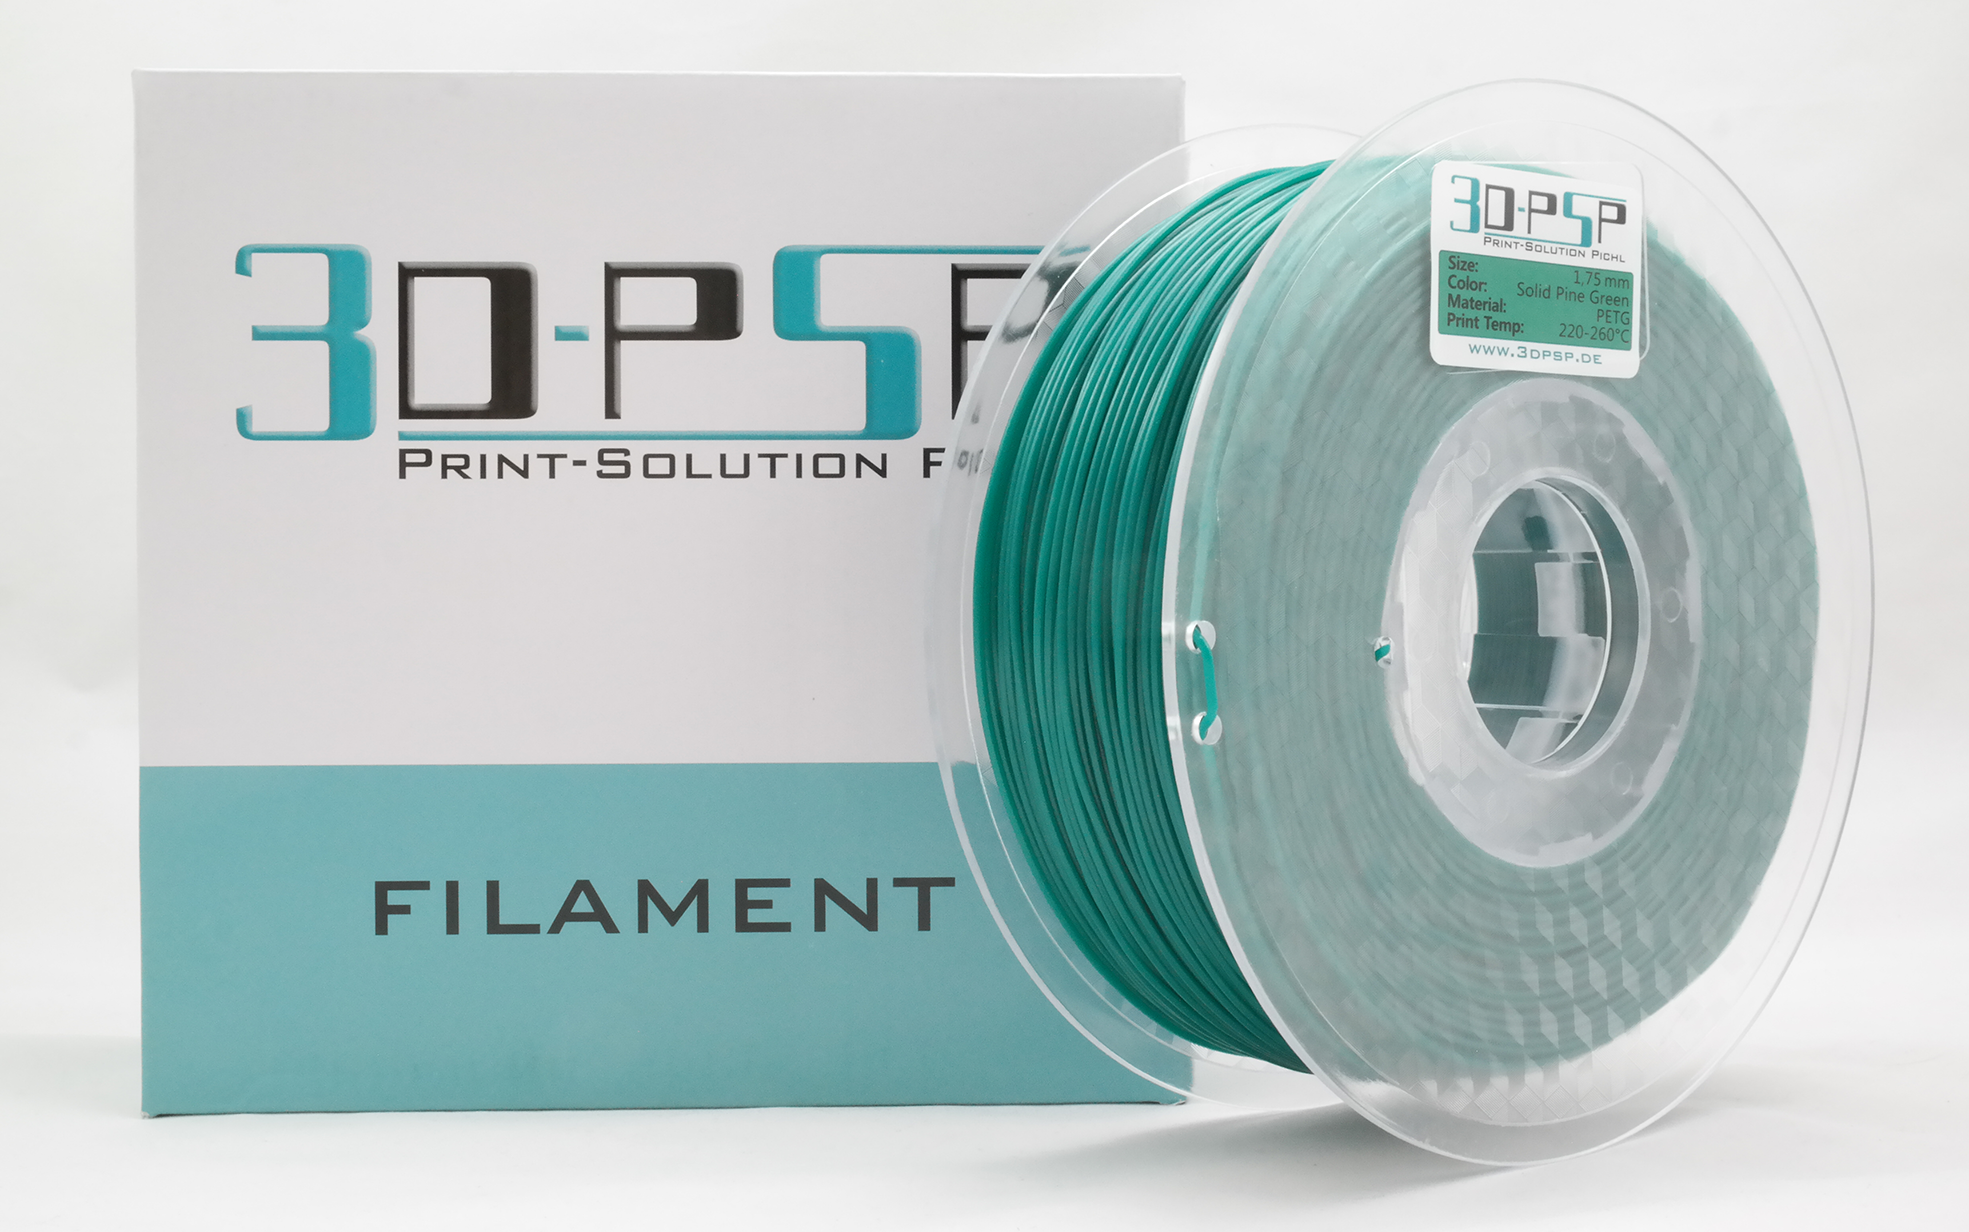 3DPSP PETG Filament  - Solid Pine Green - 1.75mm